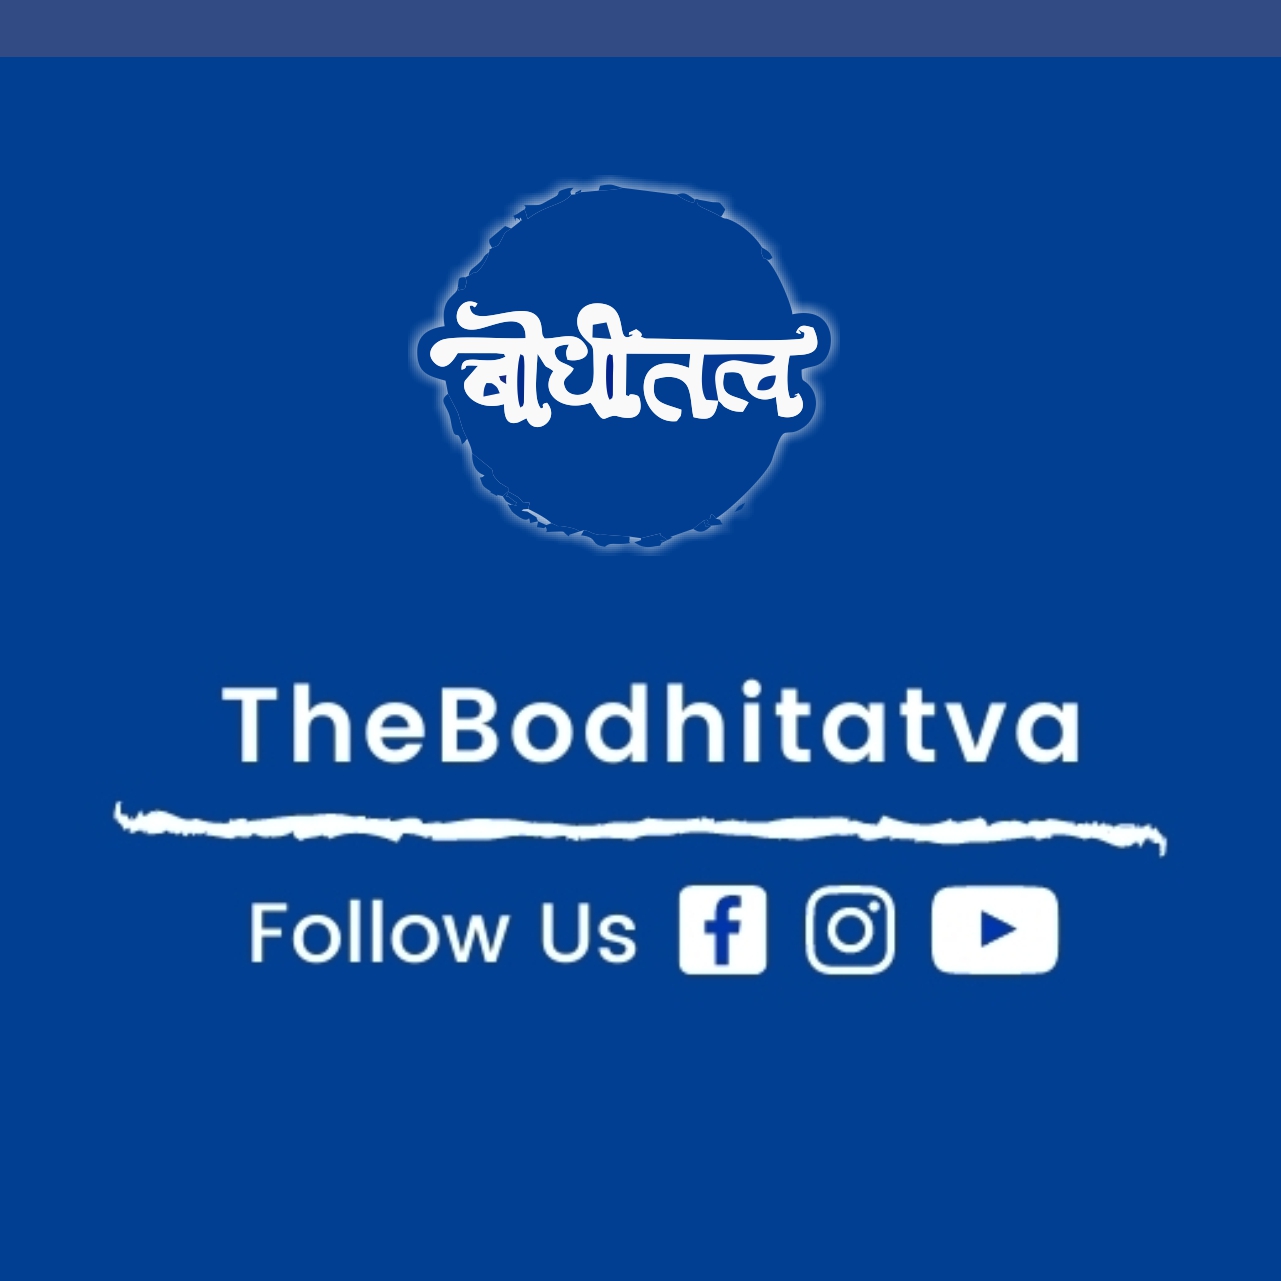 Bodhitatva.com एक व्यावसायिक मंच